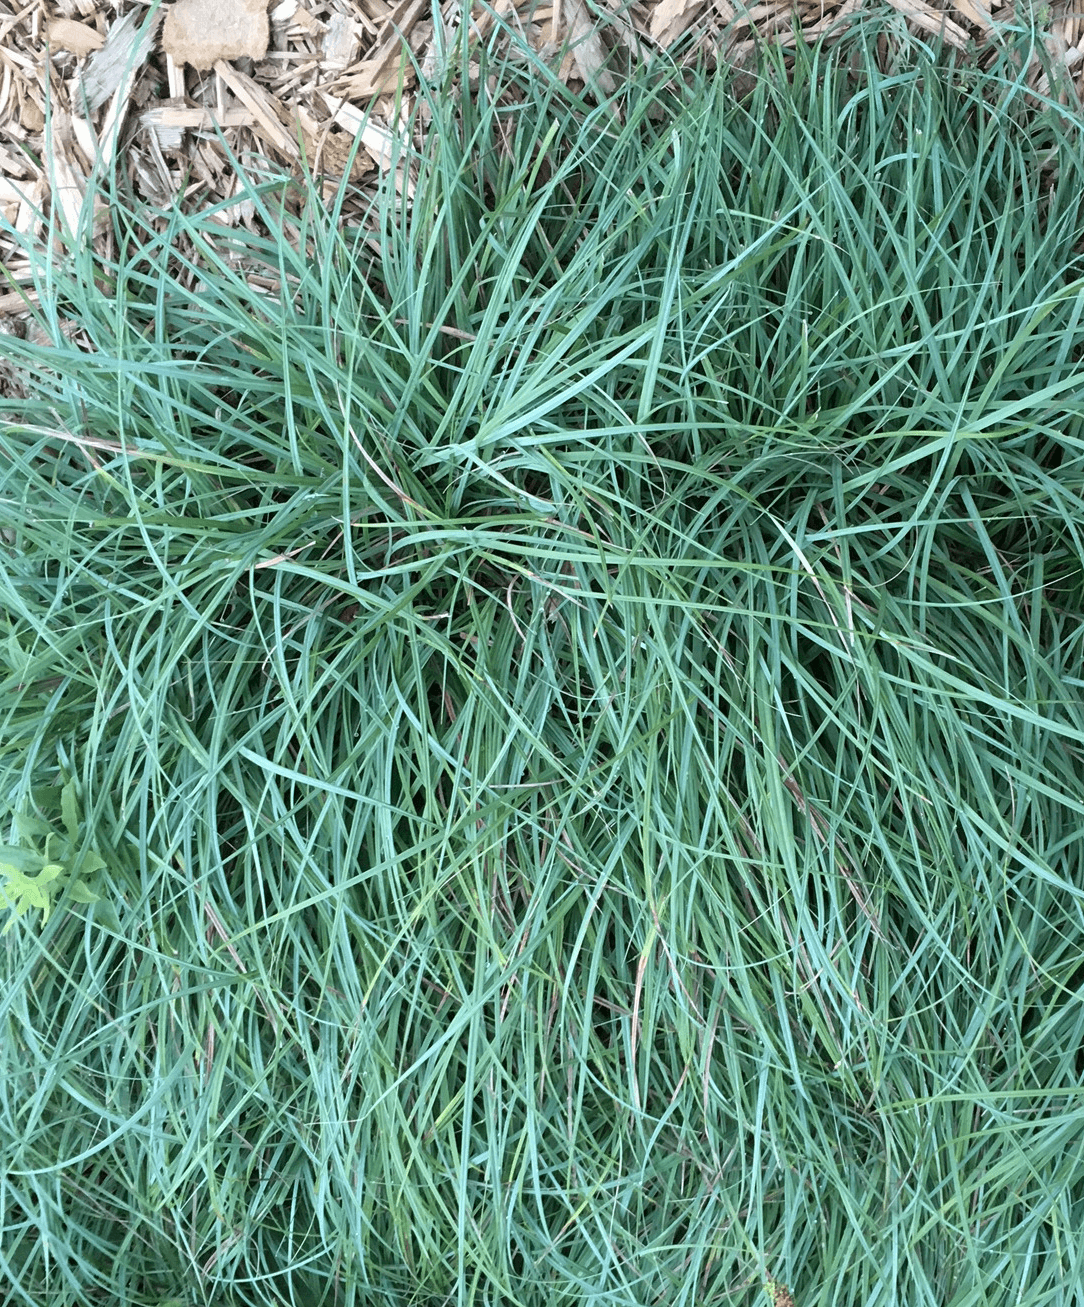 Blue Zinger sedge, Carex flacca